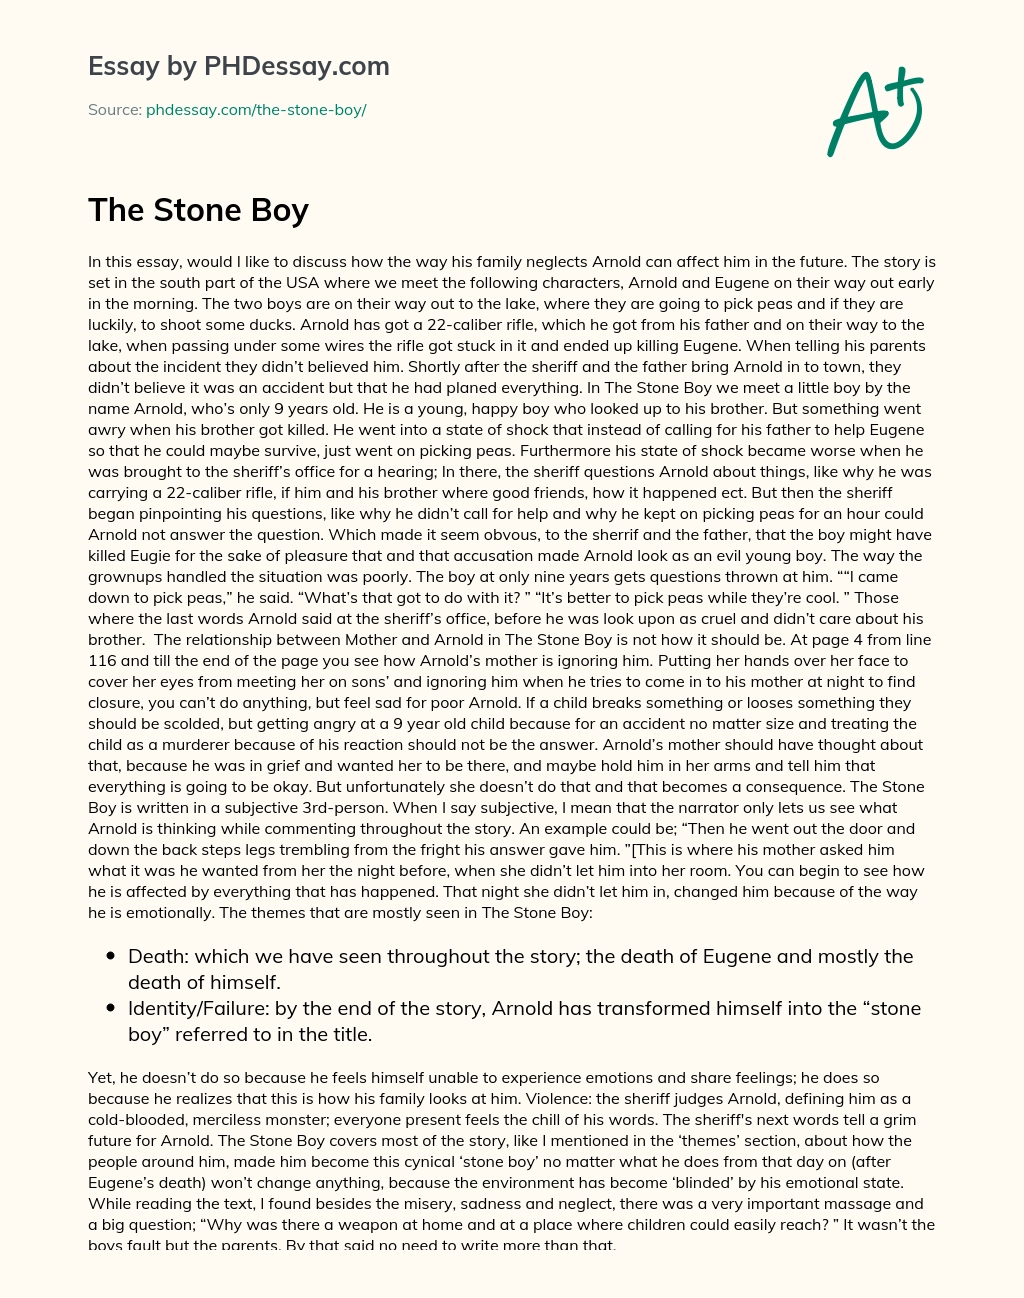 The Stone Boy essay